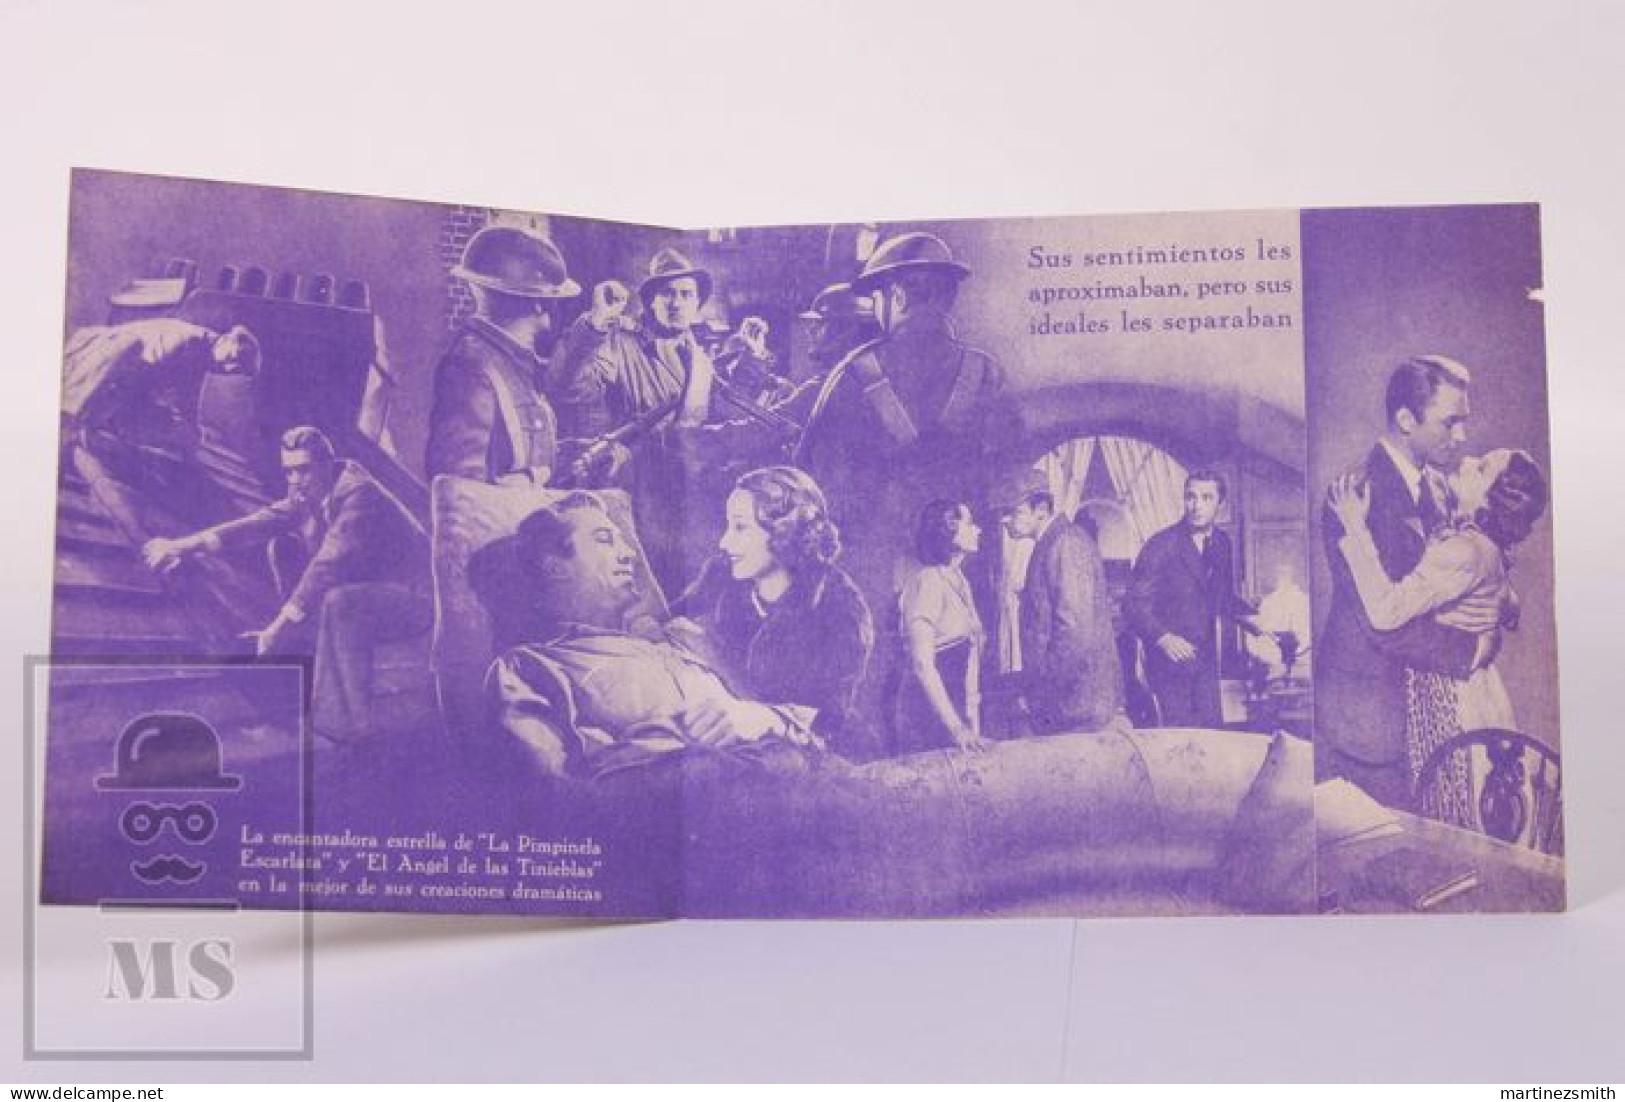 Original 1939 Beloved Enemy / Movie Advt Brochure - Merle Oberon, Brian Aherne Folded 11,2 X 13,5 Cm - Fascist Backside - Publicité Cinématographique